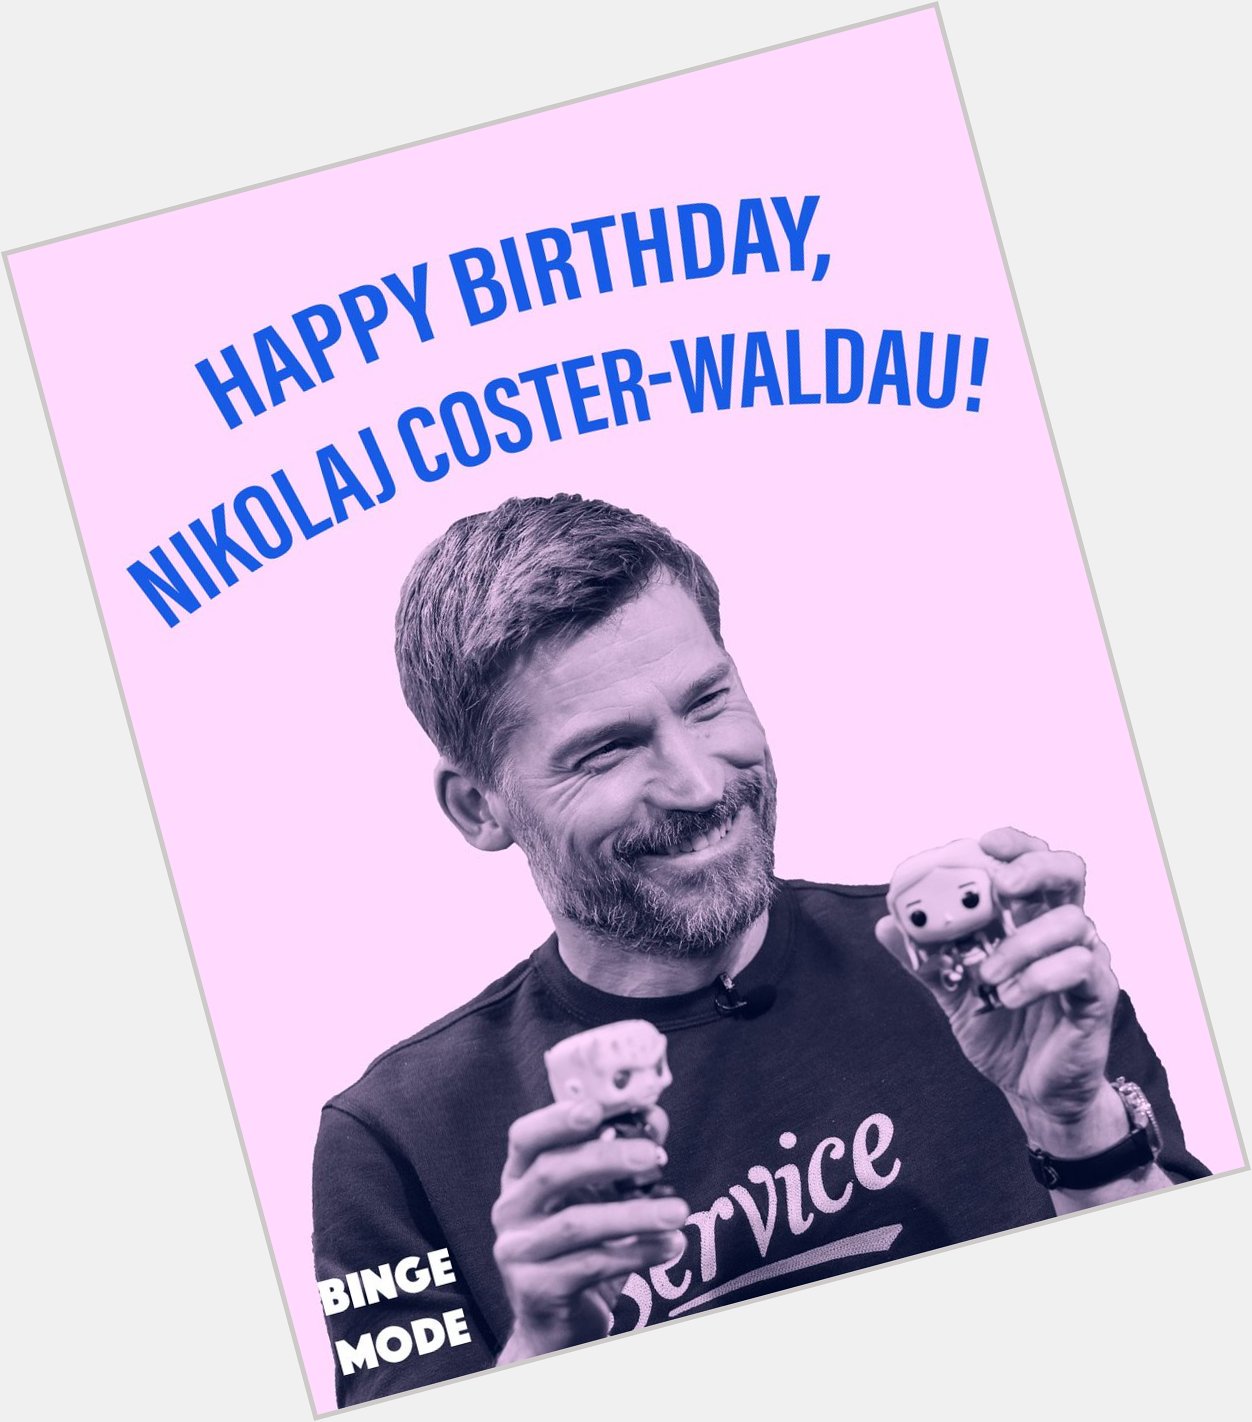 Happy birthday to our very own Kingslayer, Nikolaj Coster-Waldau! 